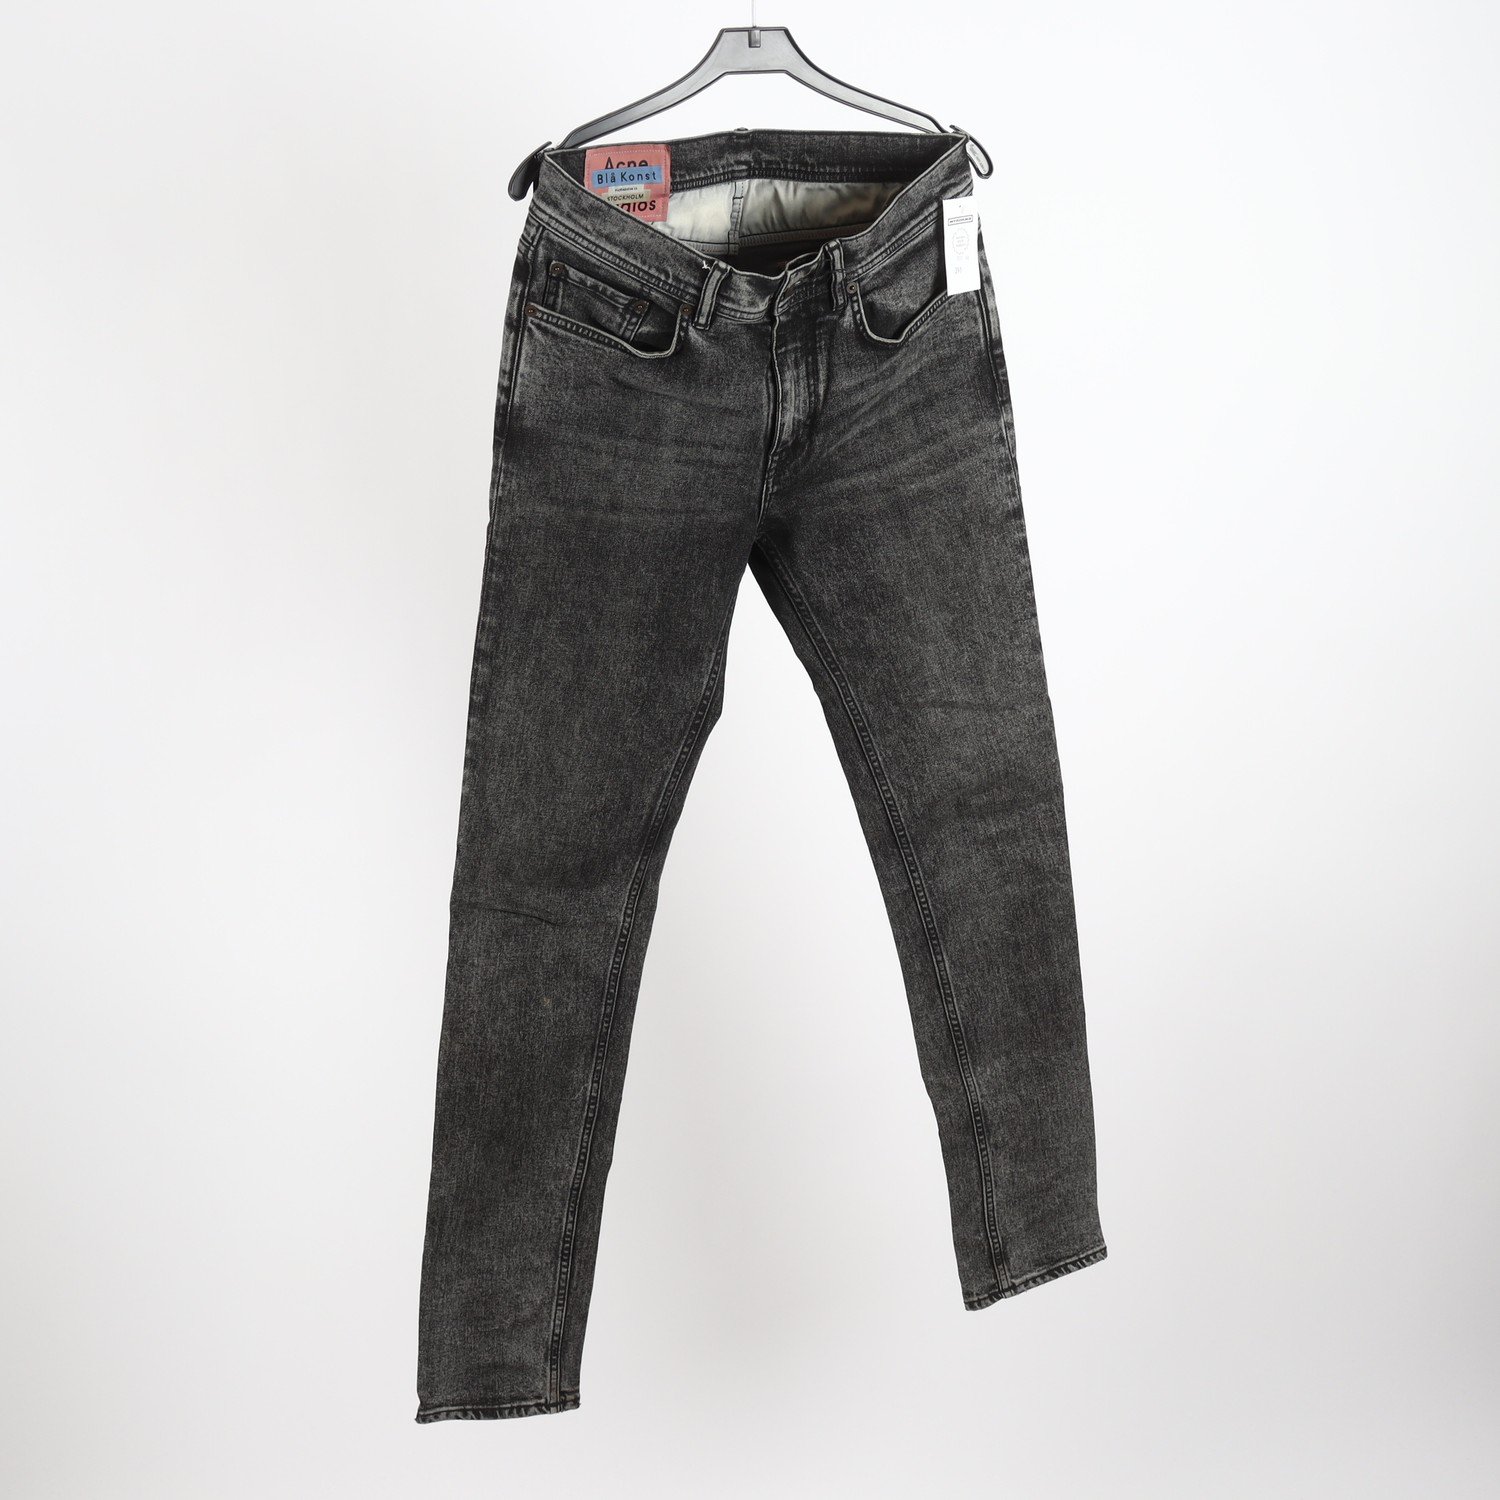 Jeans, Acne, Blå Konst, svart, stl. 30/32